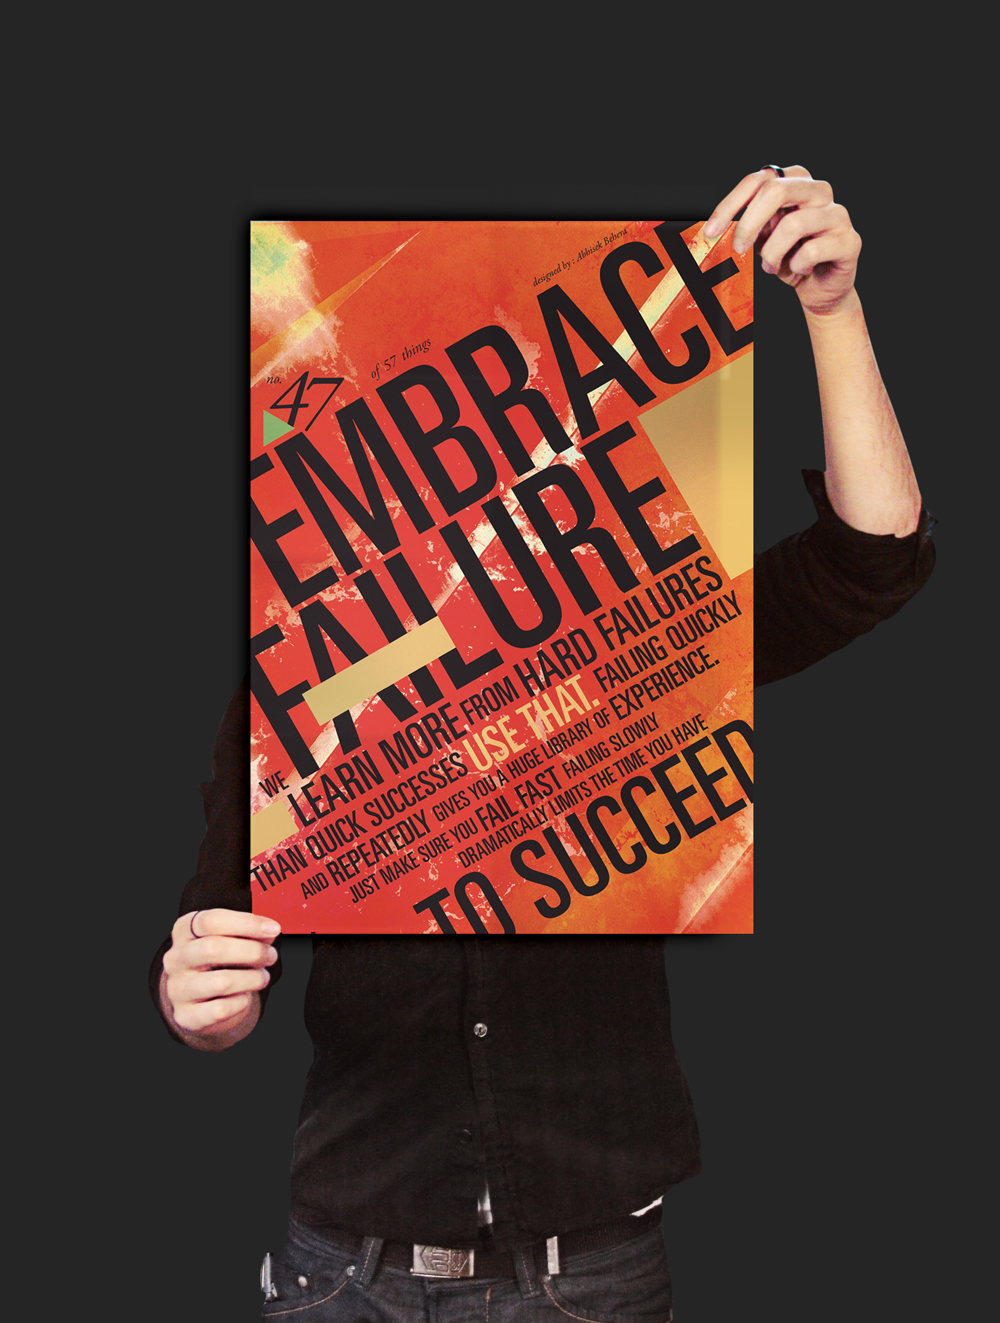 Embrace failure success